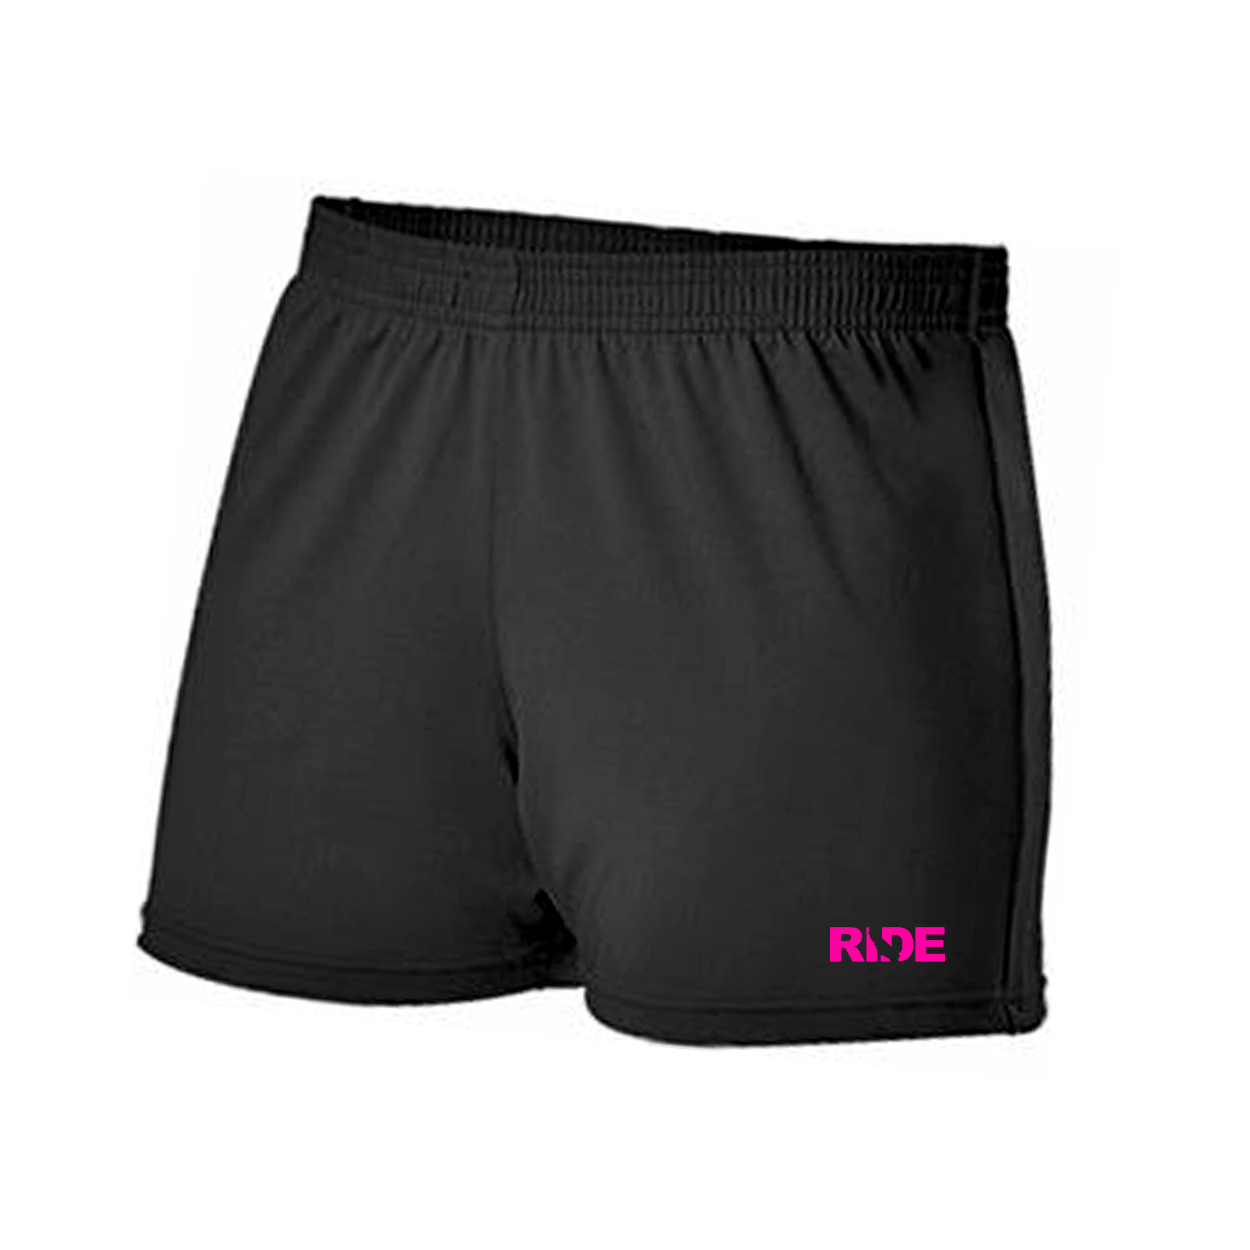 Ride California Classic Women's Cheer Shorts Black (Pink Logo)